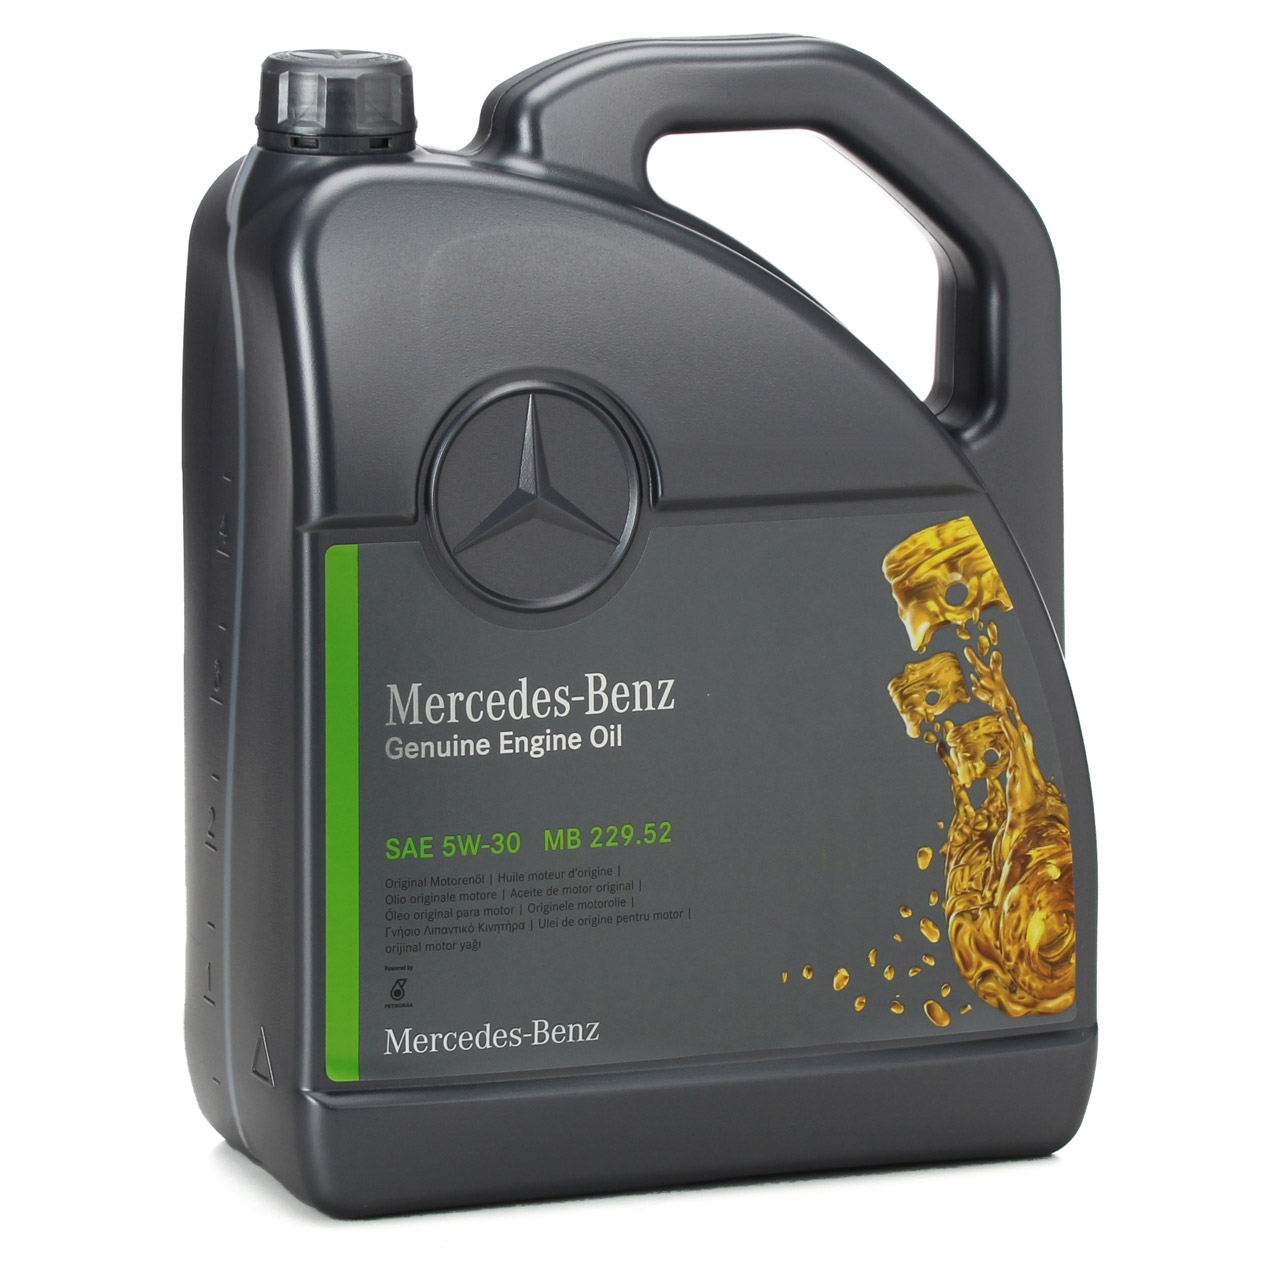 ORIGINAL Mercedes Autobatterie Batterie Starterbatterie 12V 100Ah  000982330826